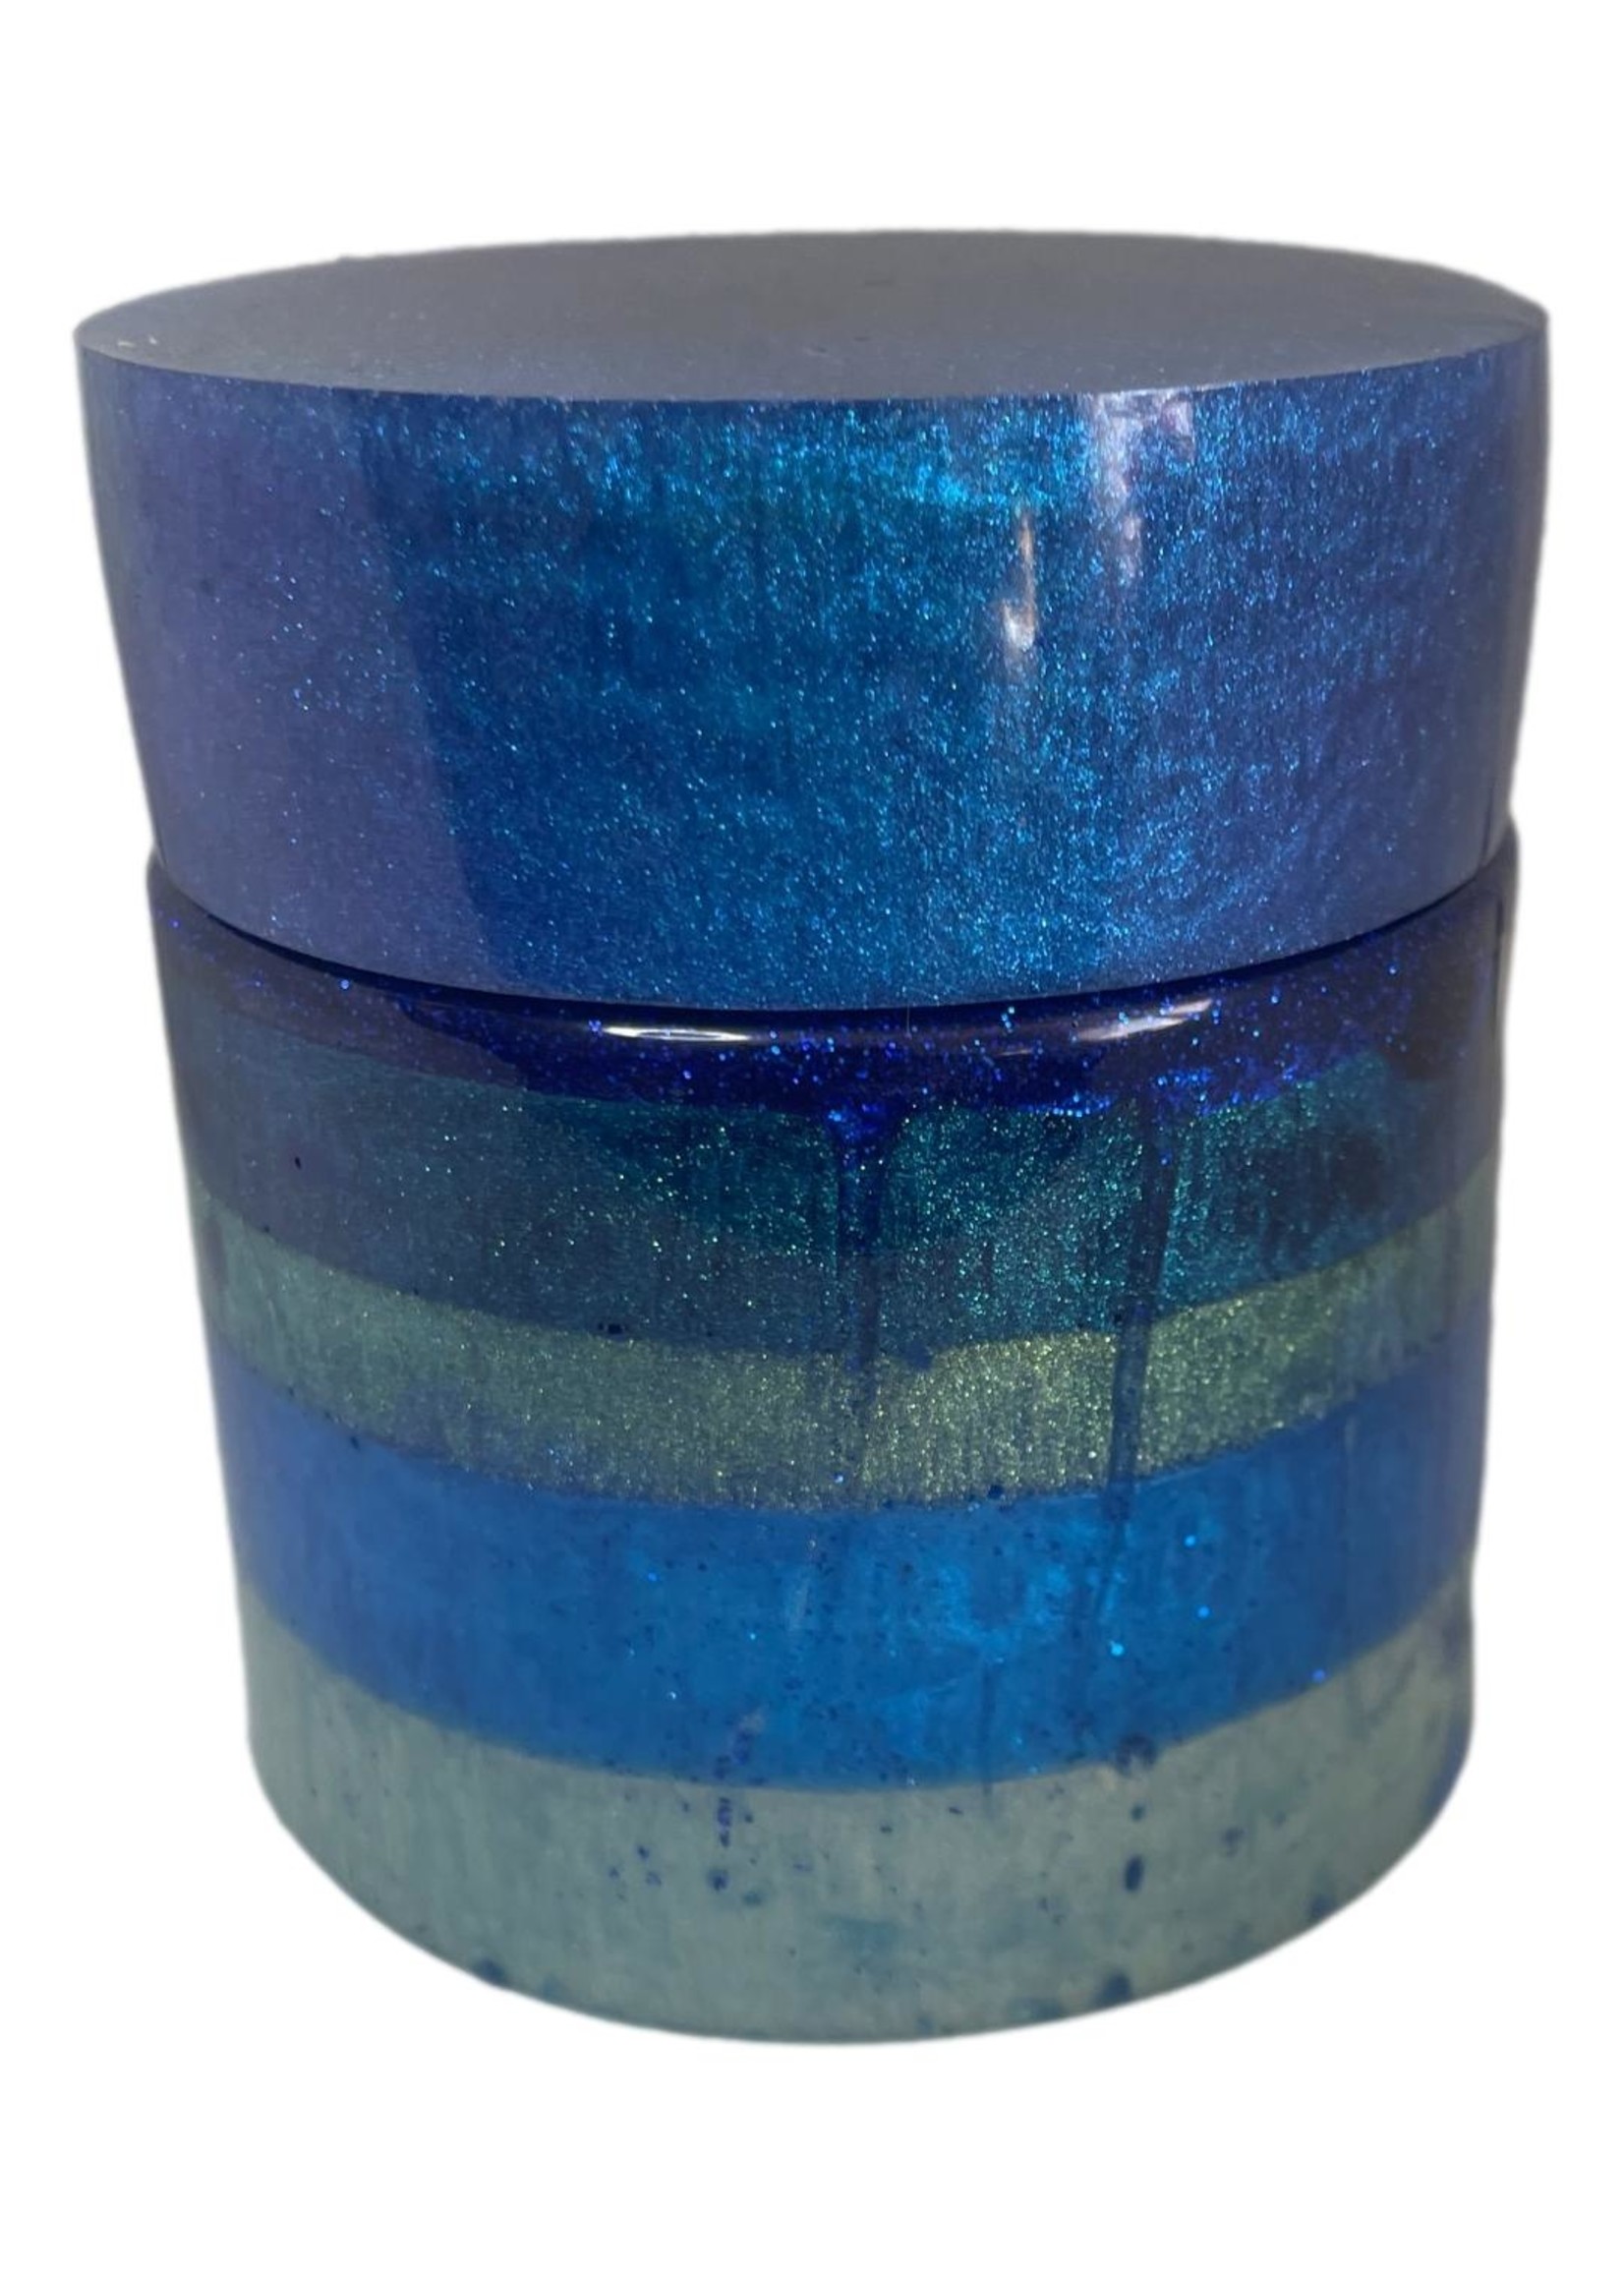 East Coast Sirens Blue Striped Stash/Trinket Jar with Screw-on Lid